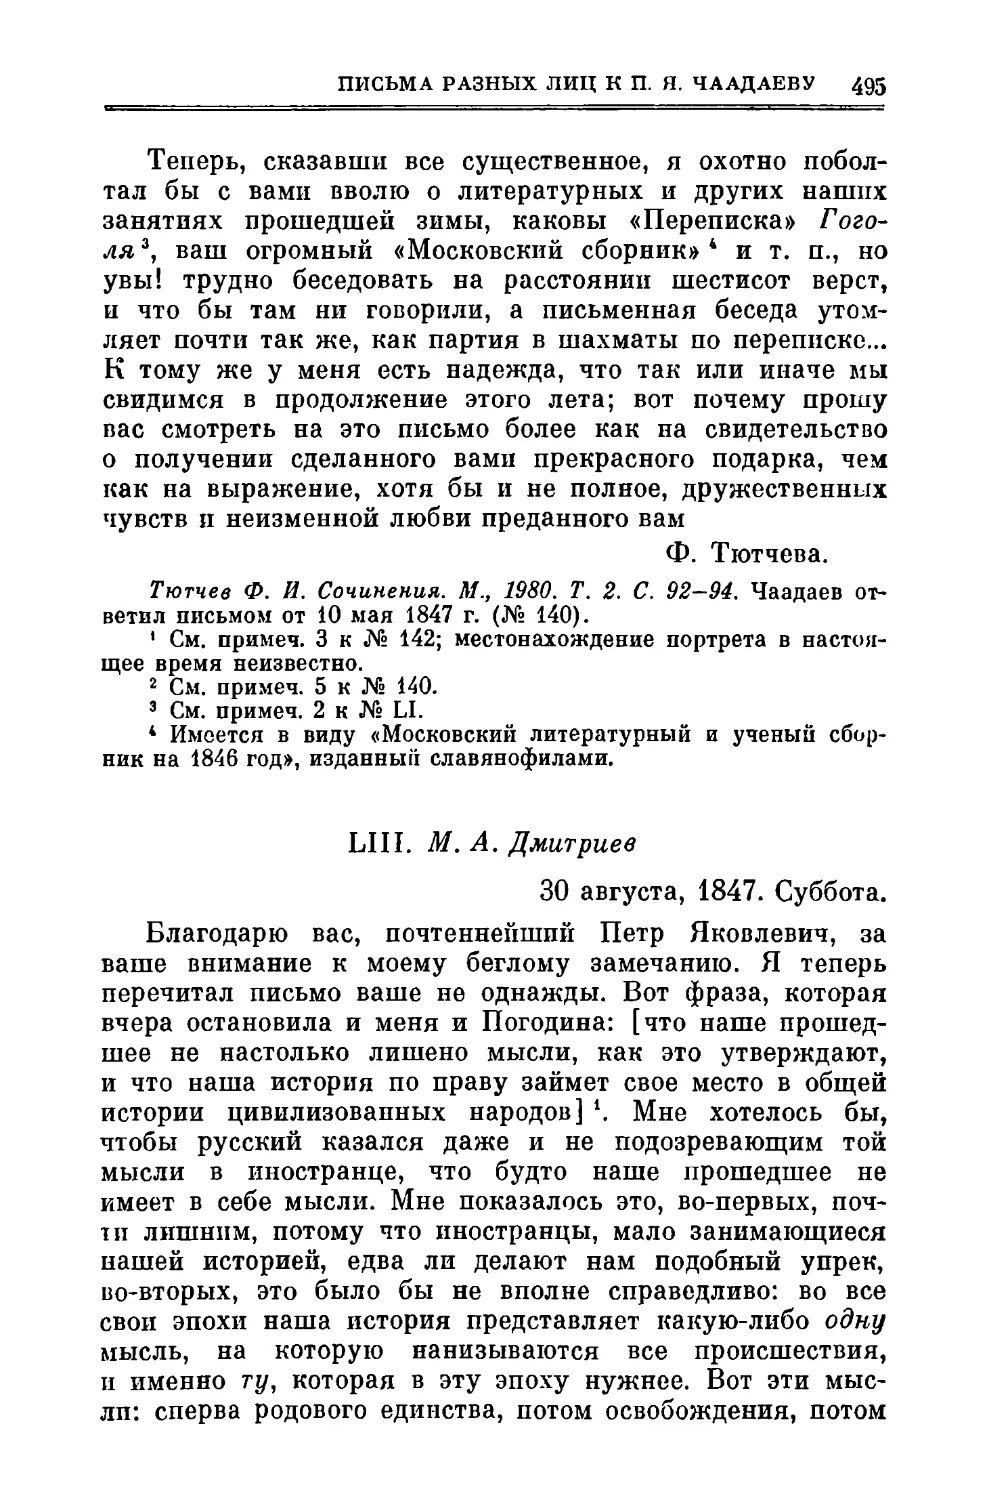 LІІІ. Дмитриев M.A. 30.VIII.1847